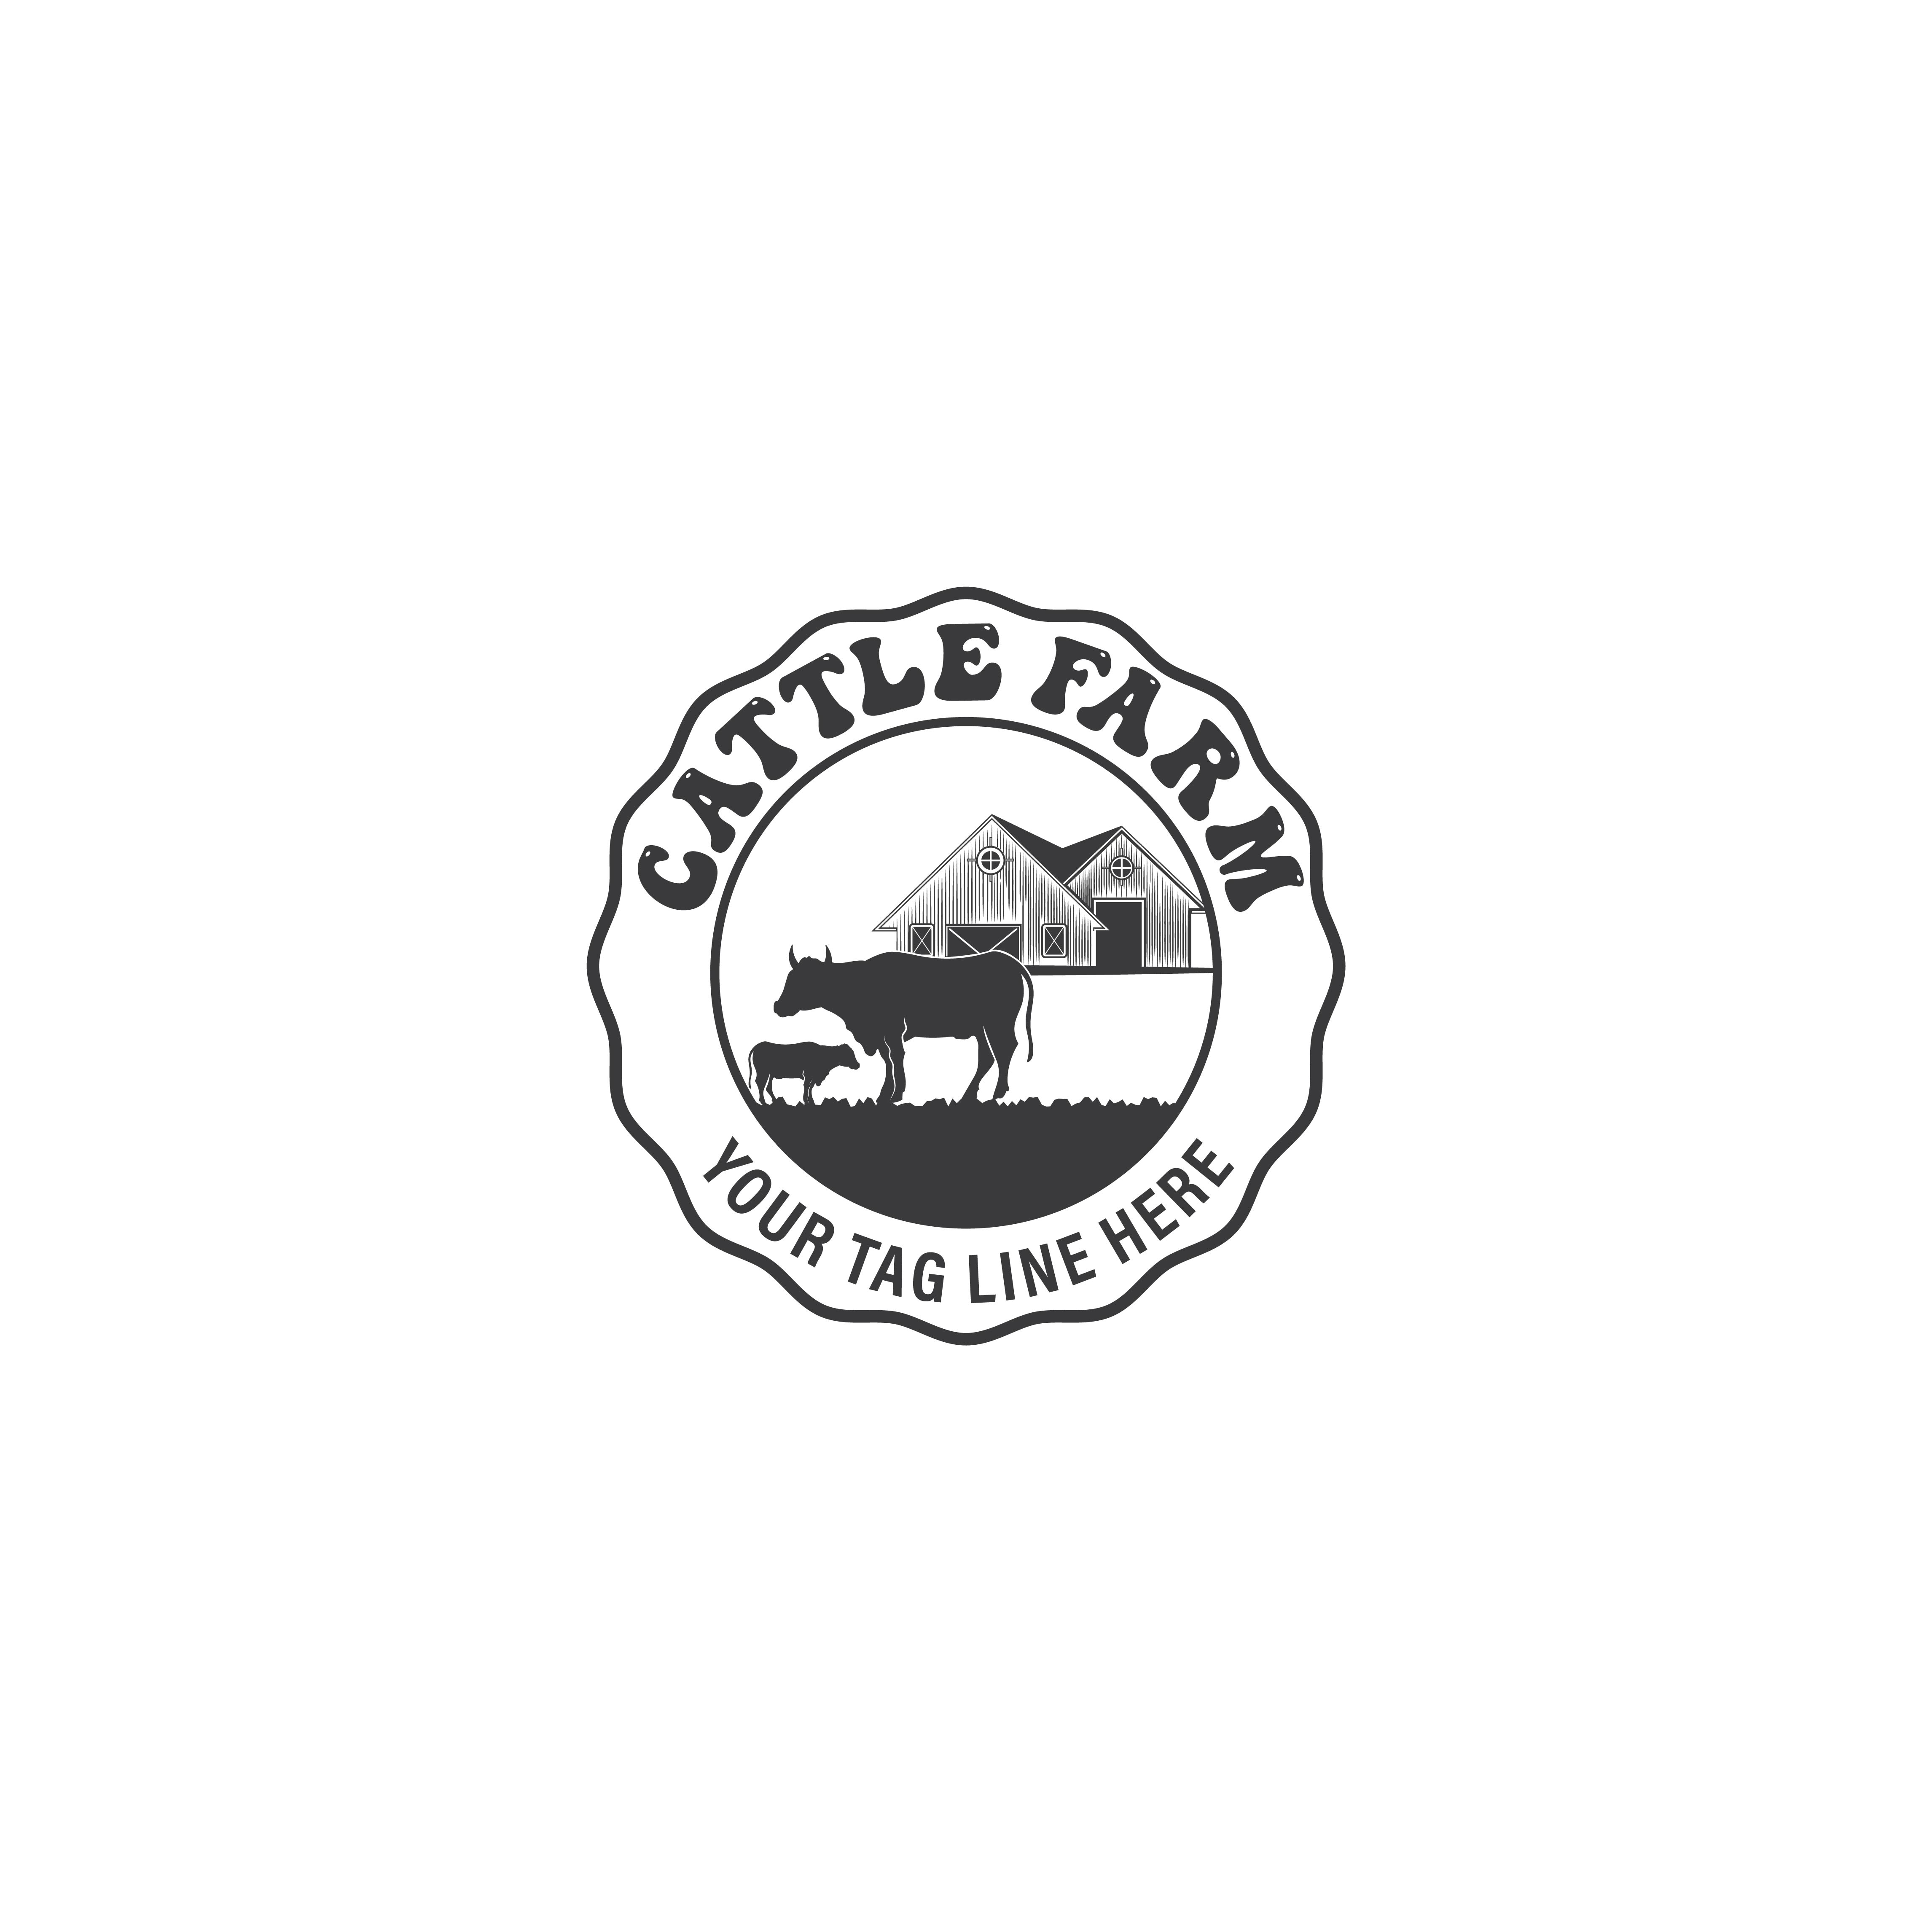 Cattle Farm logo Design professional logo design preview image.